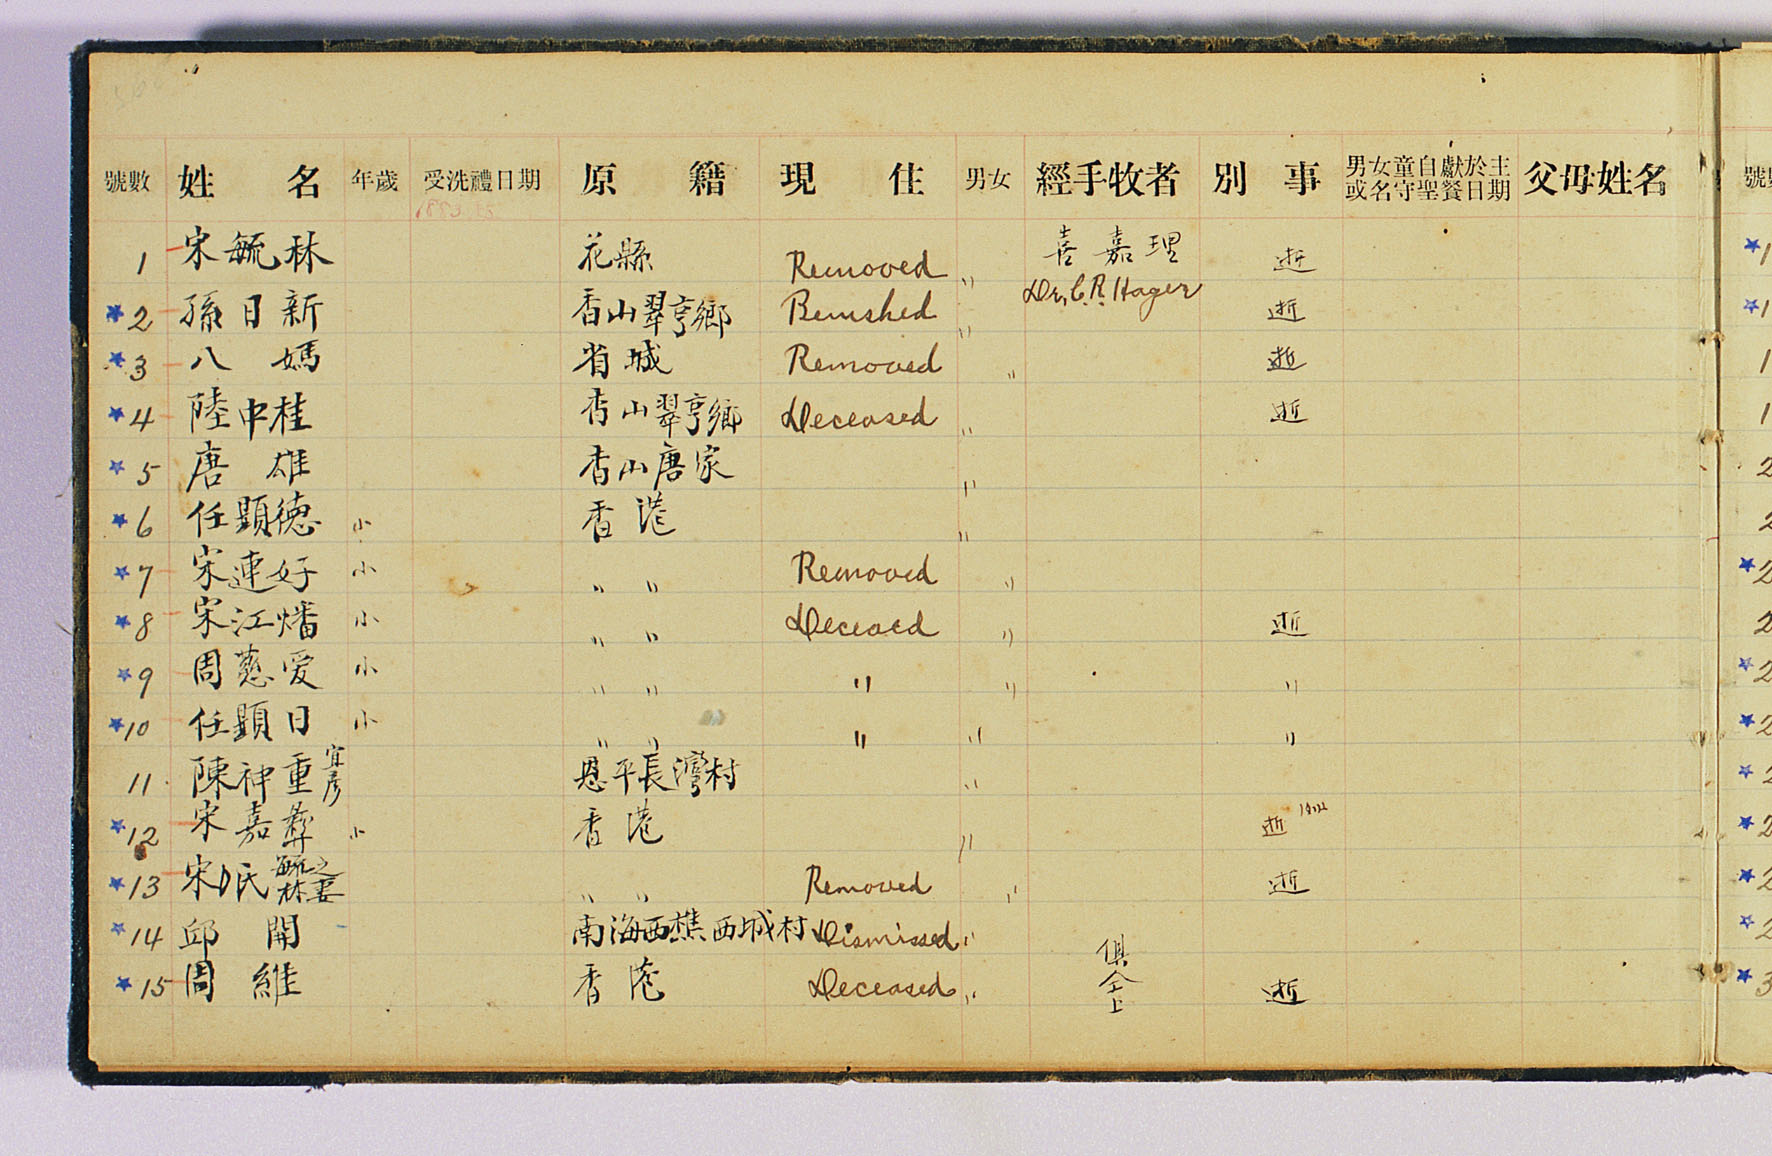 Baptism record of Dr Sun Yat-sen, 1910s.